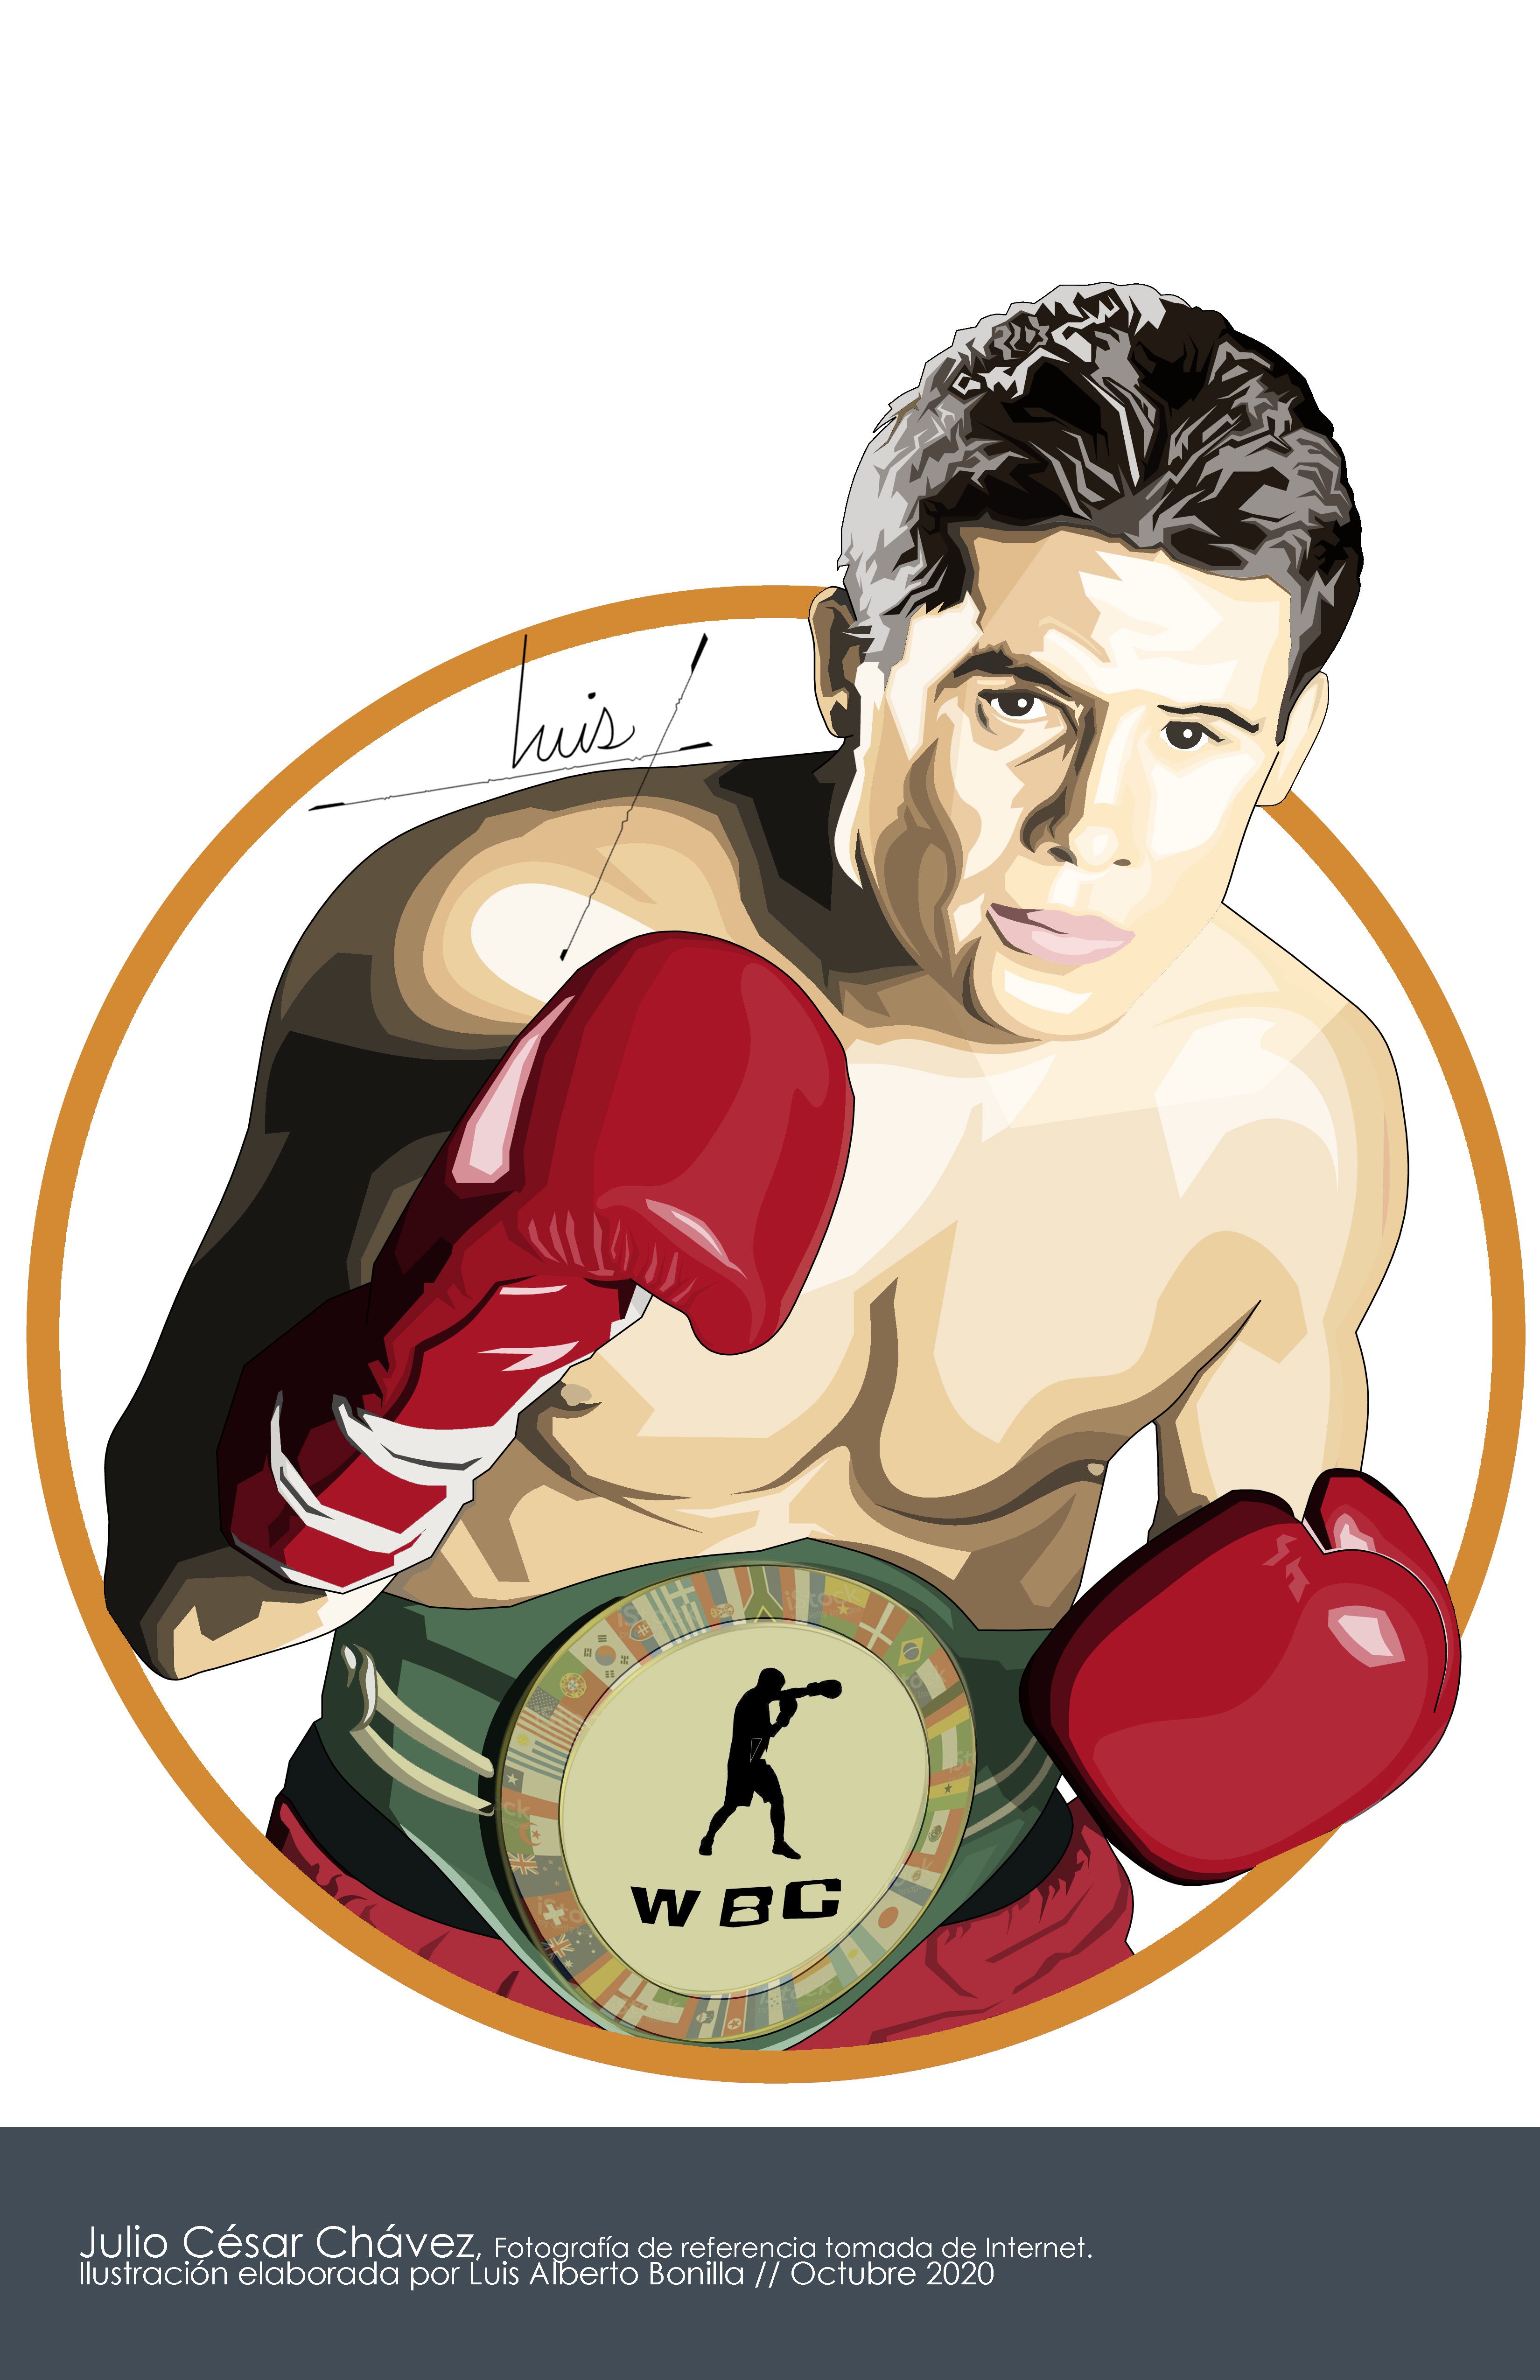 Julio César Chávez. Sports illustrations art, Sport illustration, Box art